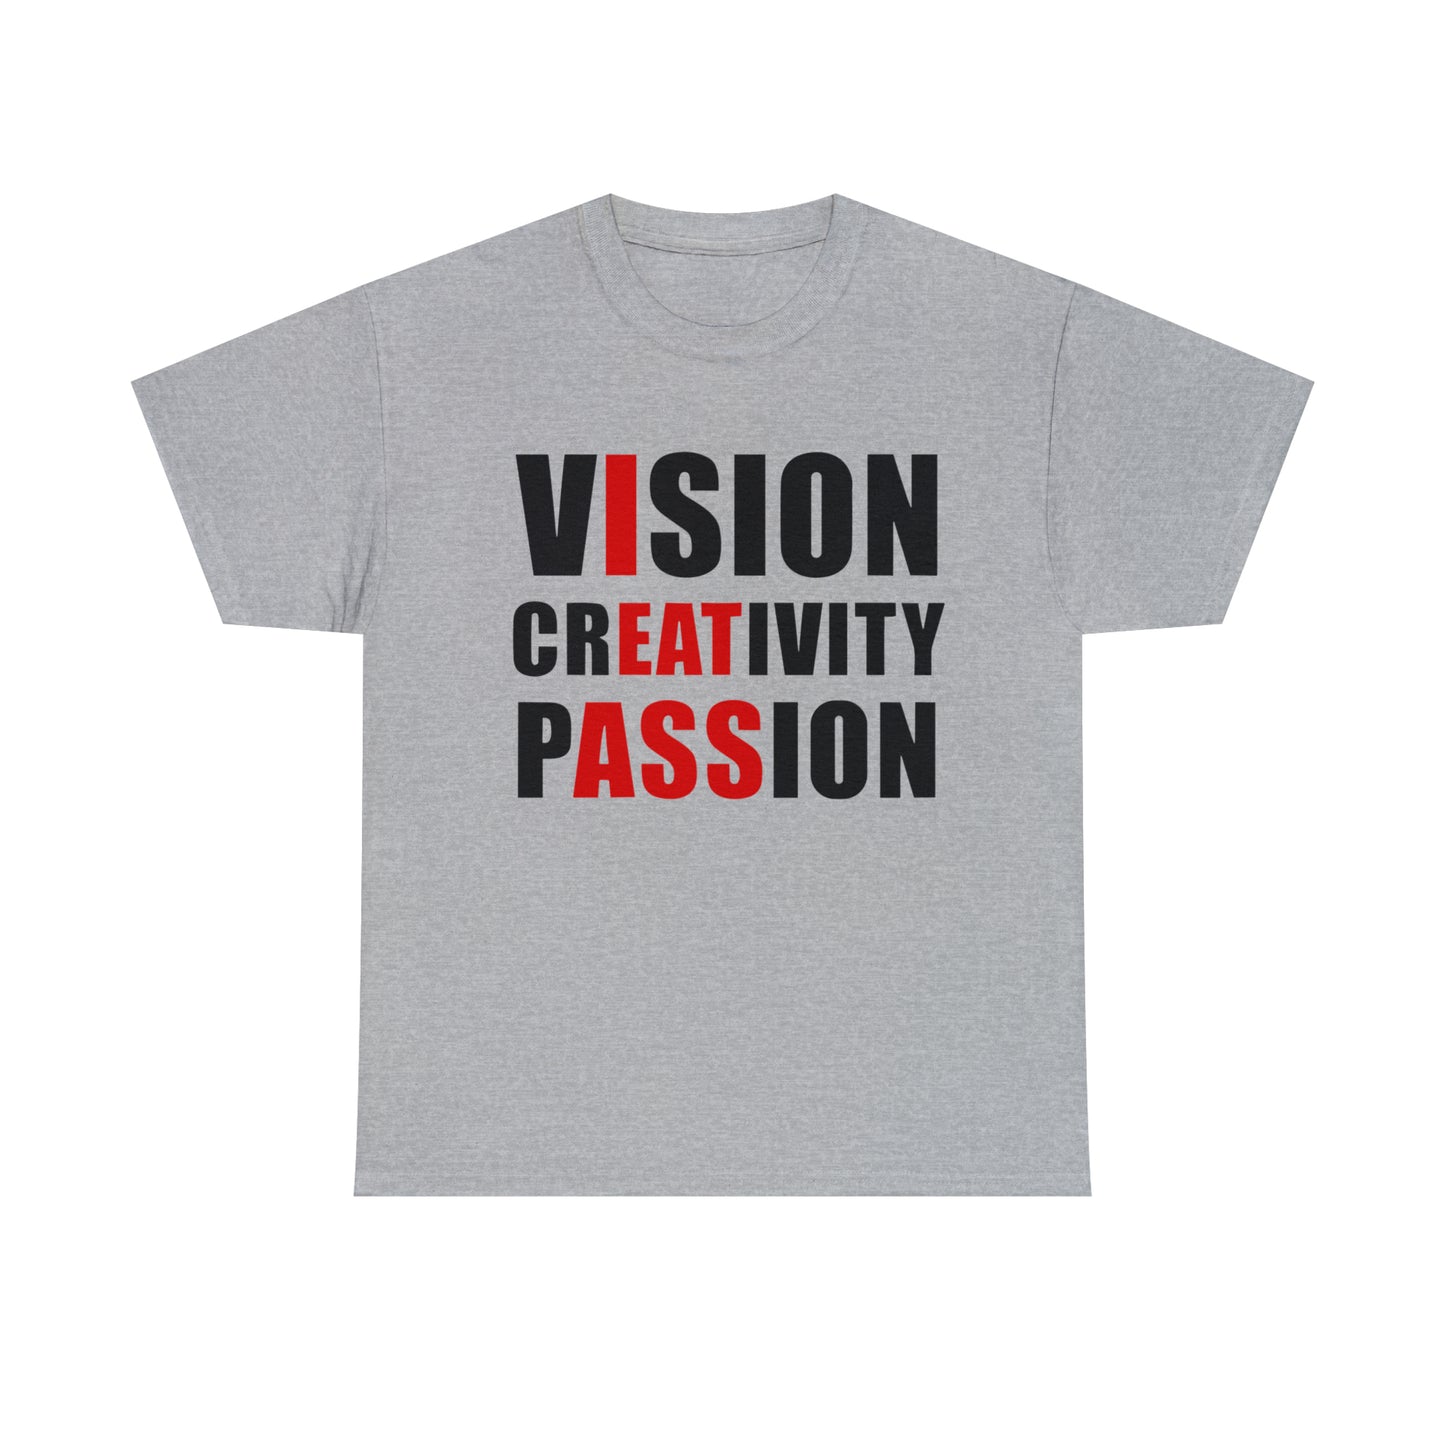 "Vision Creativity Passion" Tee